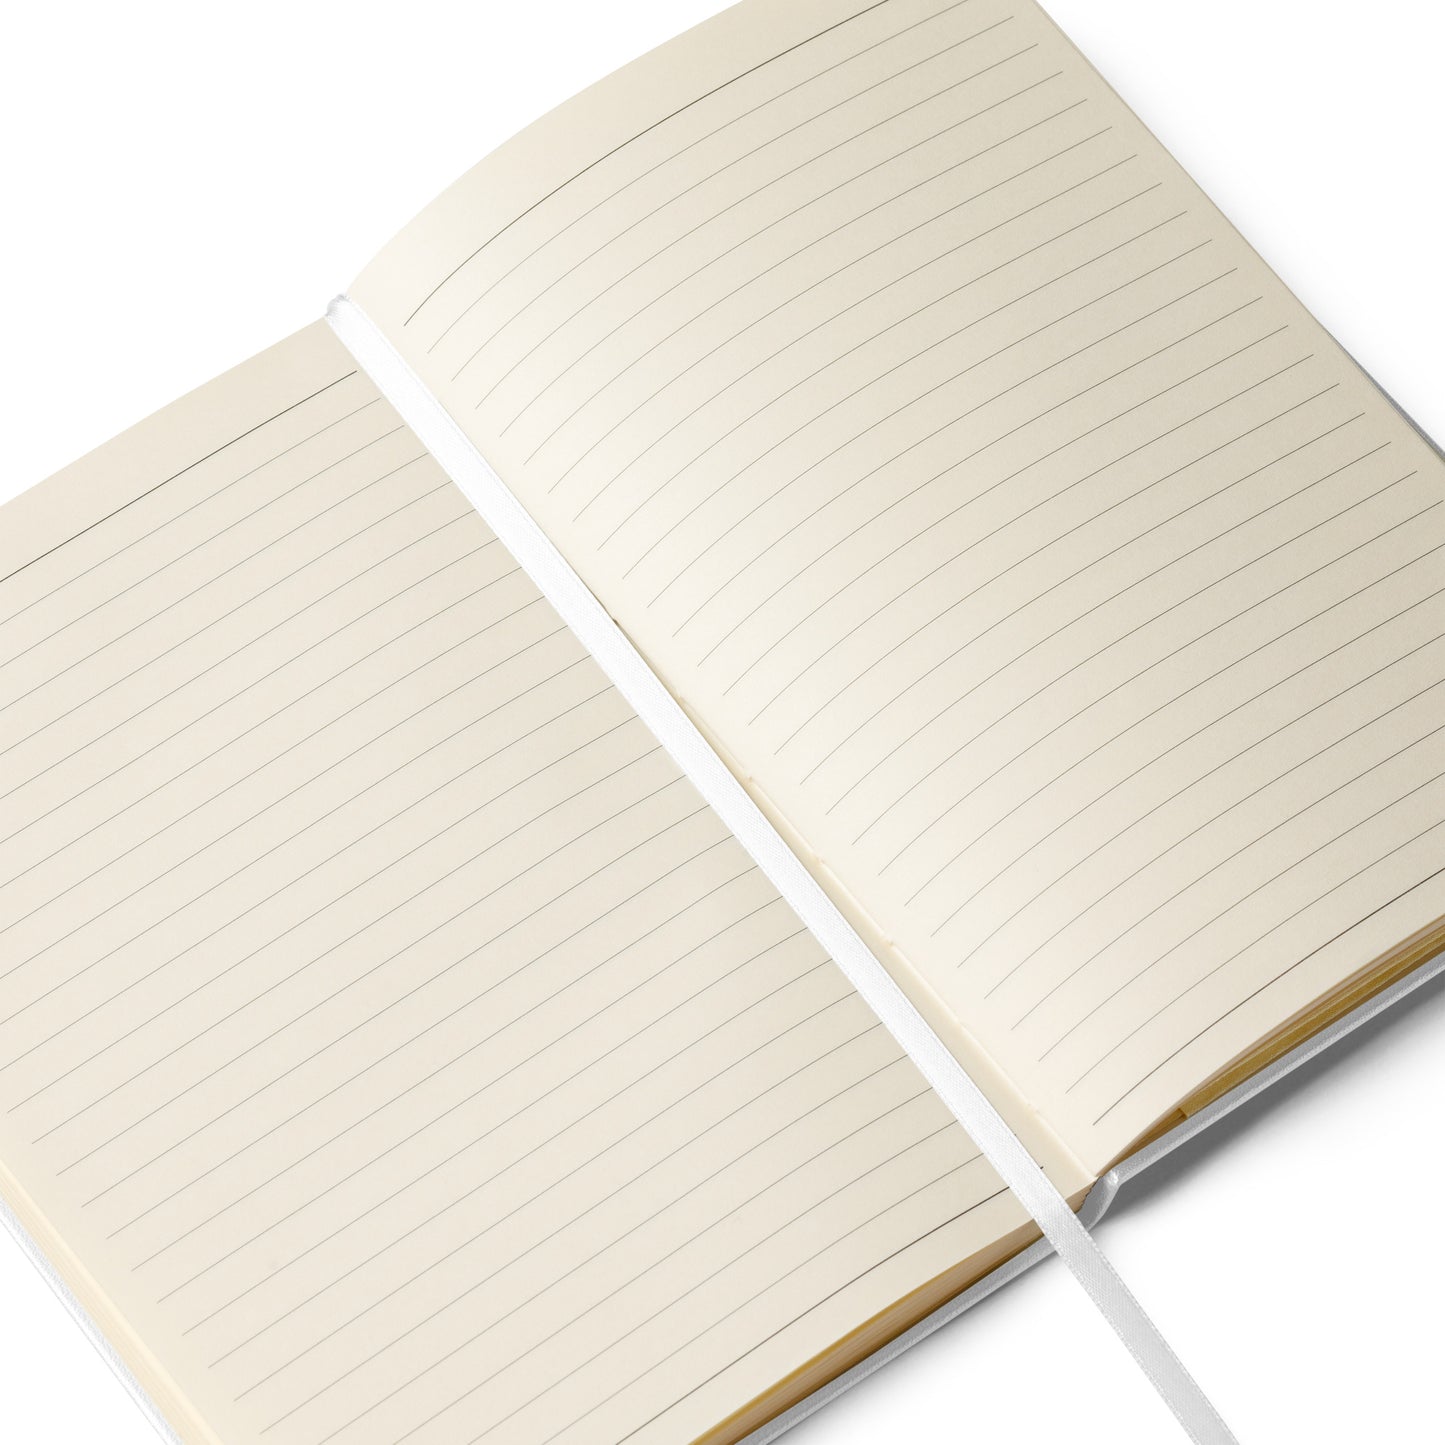 M Hardcover Bound Notebook